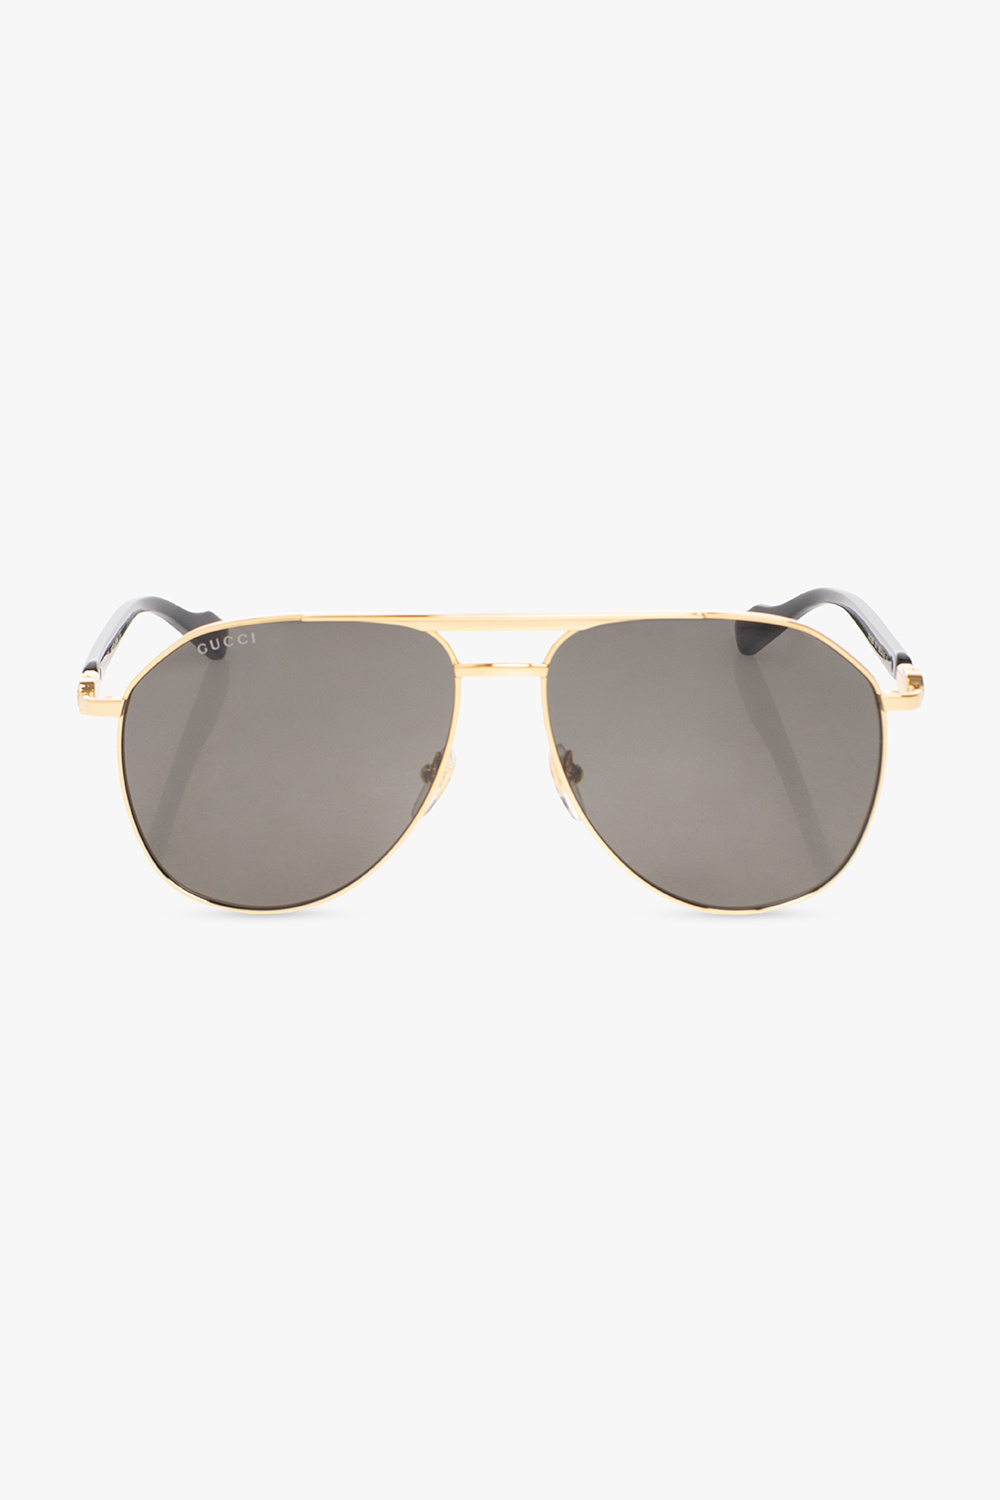 Gucci Stevie Sport Sunglasses